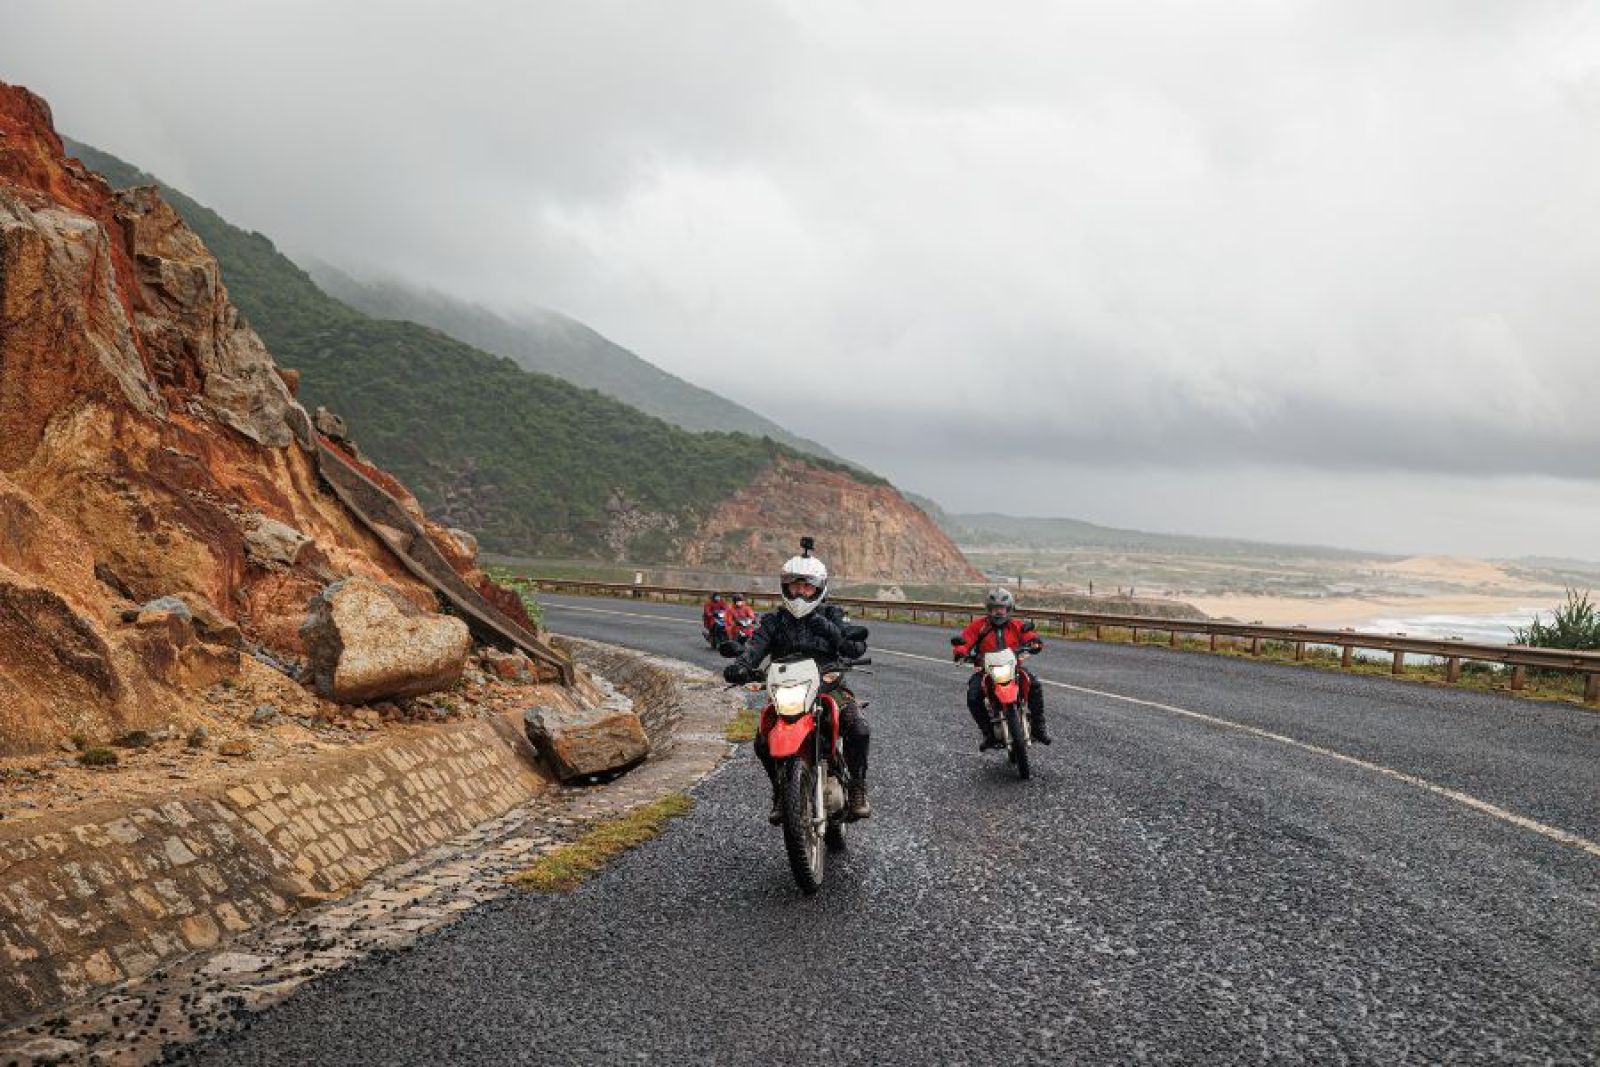 MakeYourAsia & Motopodróżni 2022 Vietnam Motorbike Tour